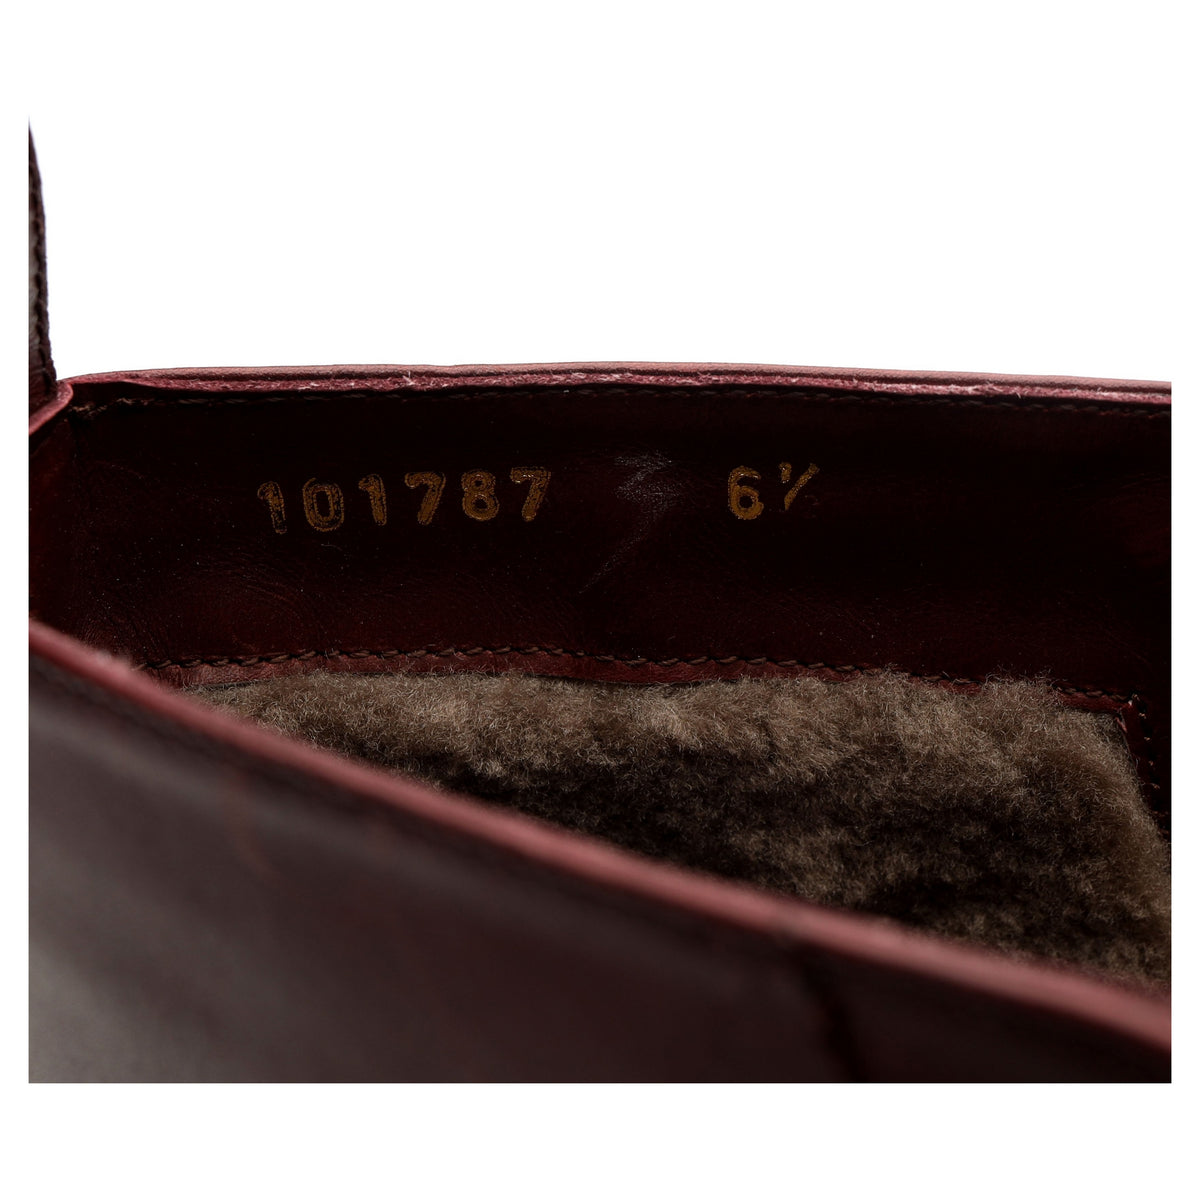 &#39;101747 &#39;Burgundy Leather Boots UK 6.5 E